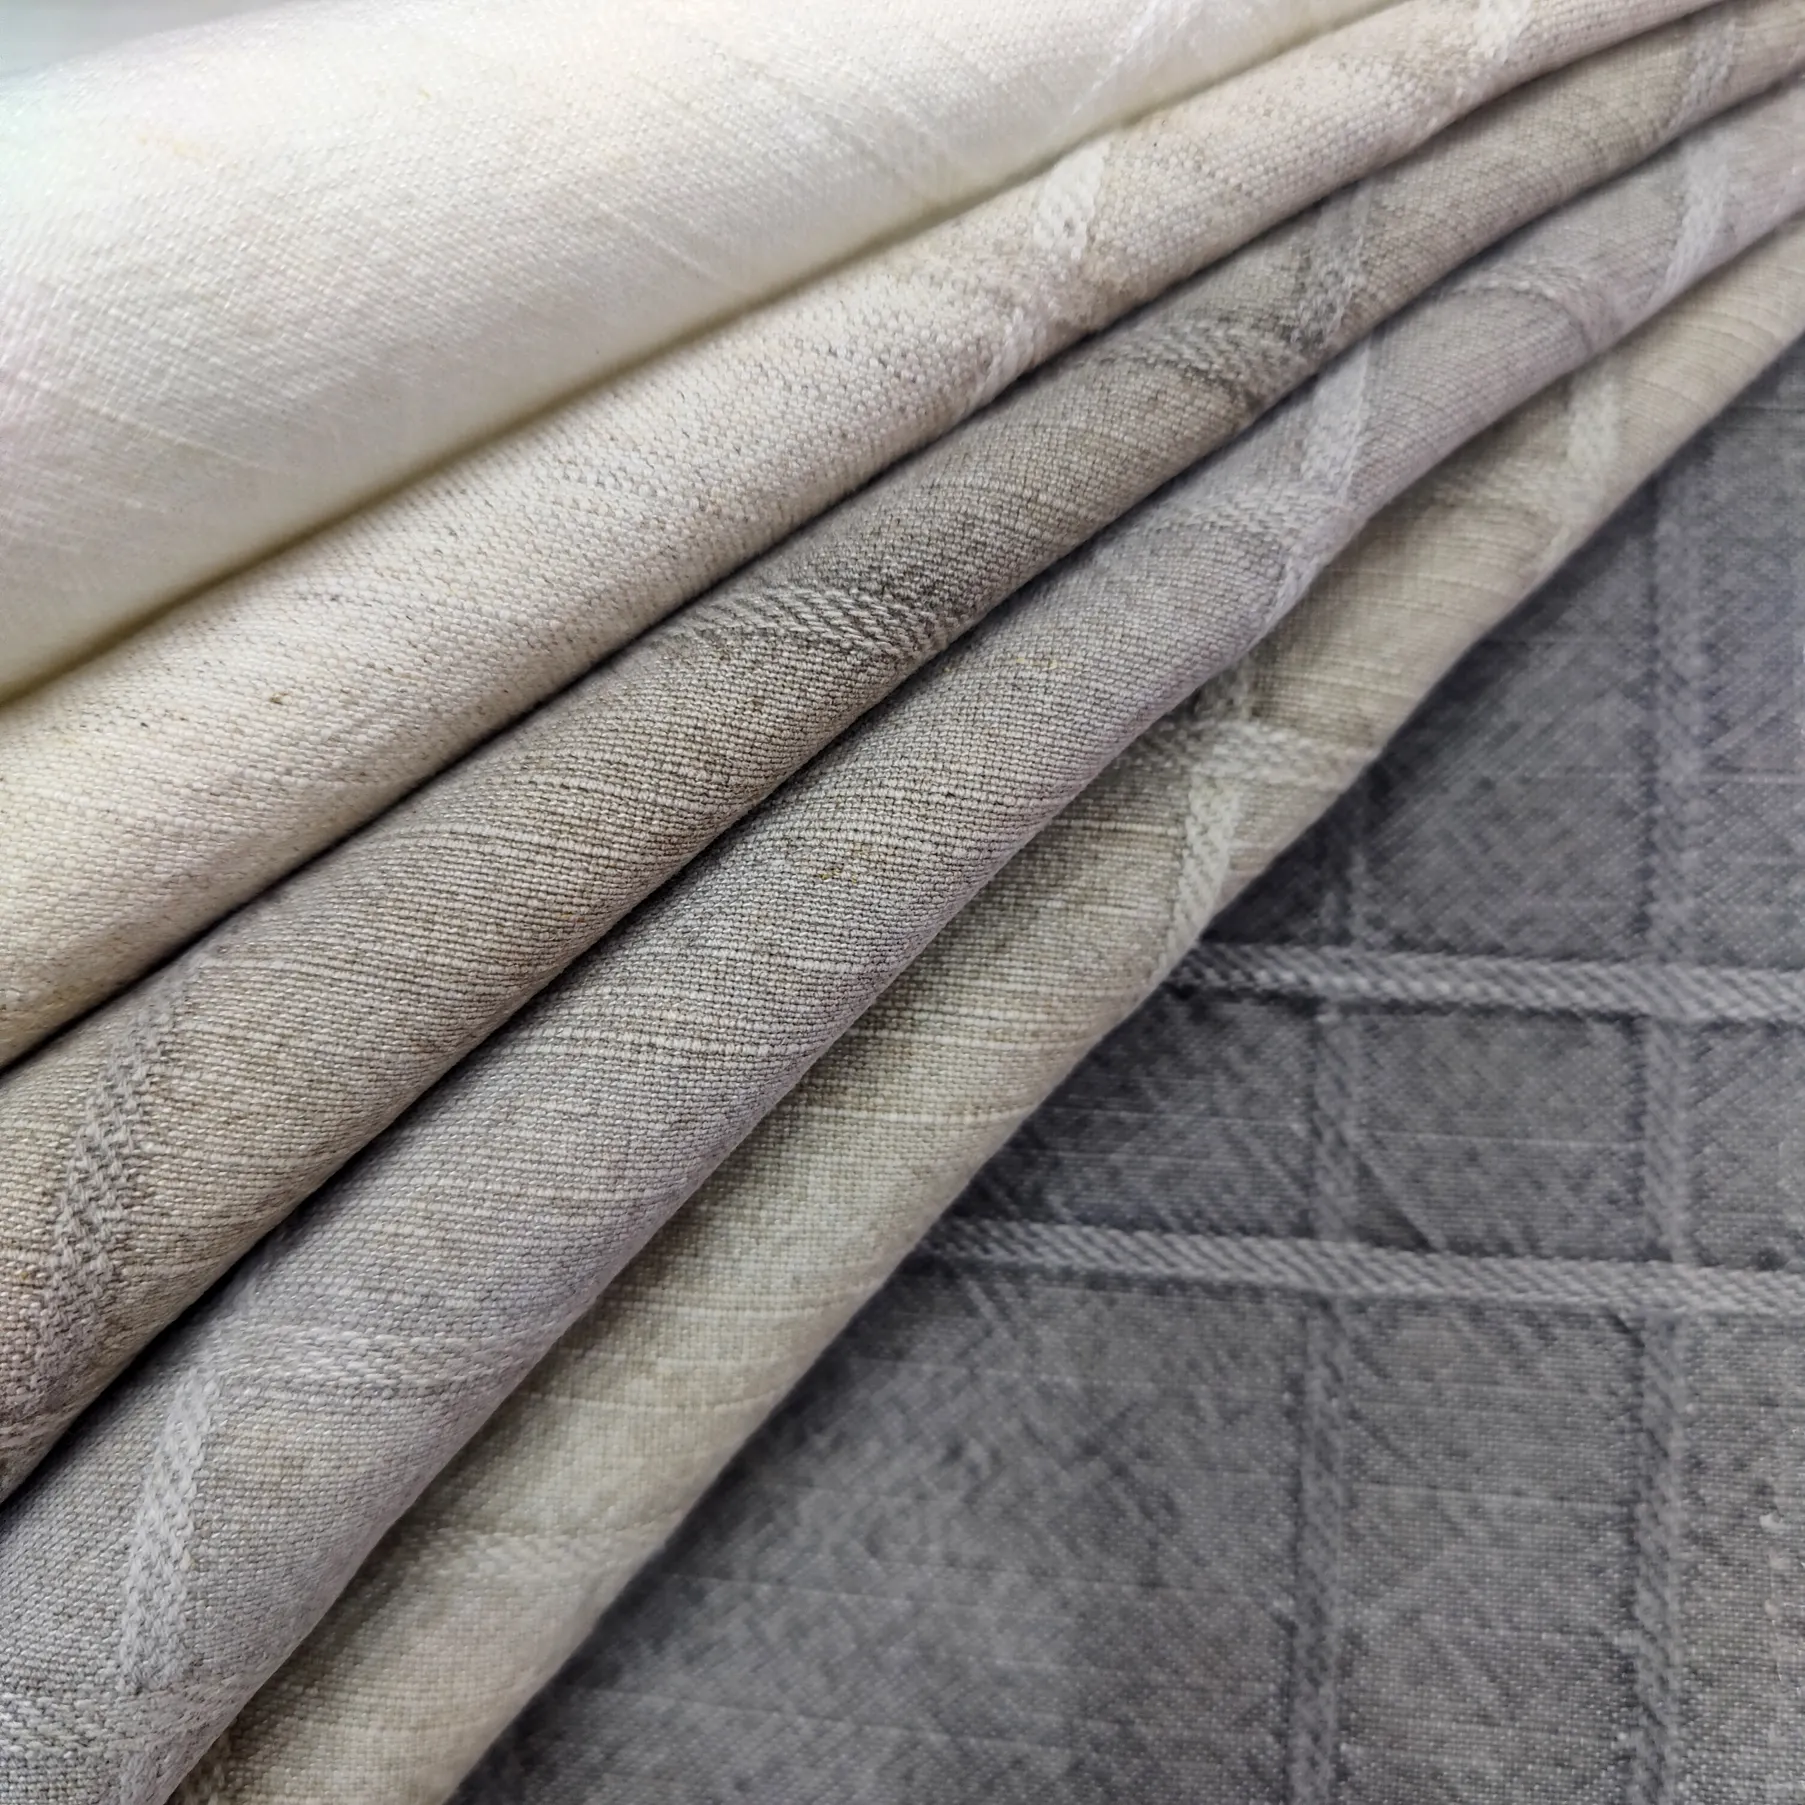 Bomar RW1547 Jacquard Weave Jute Cotton Blend Fabric for Furniture Sofa Curtain